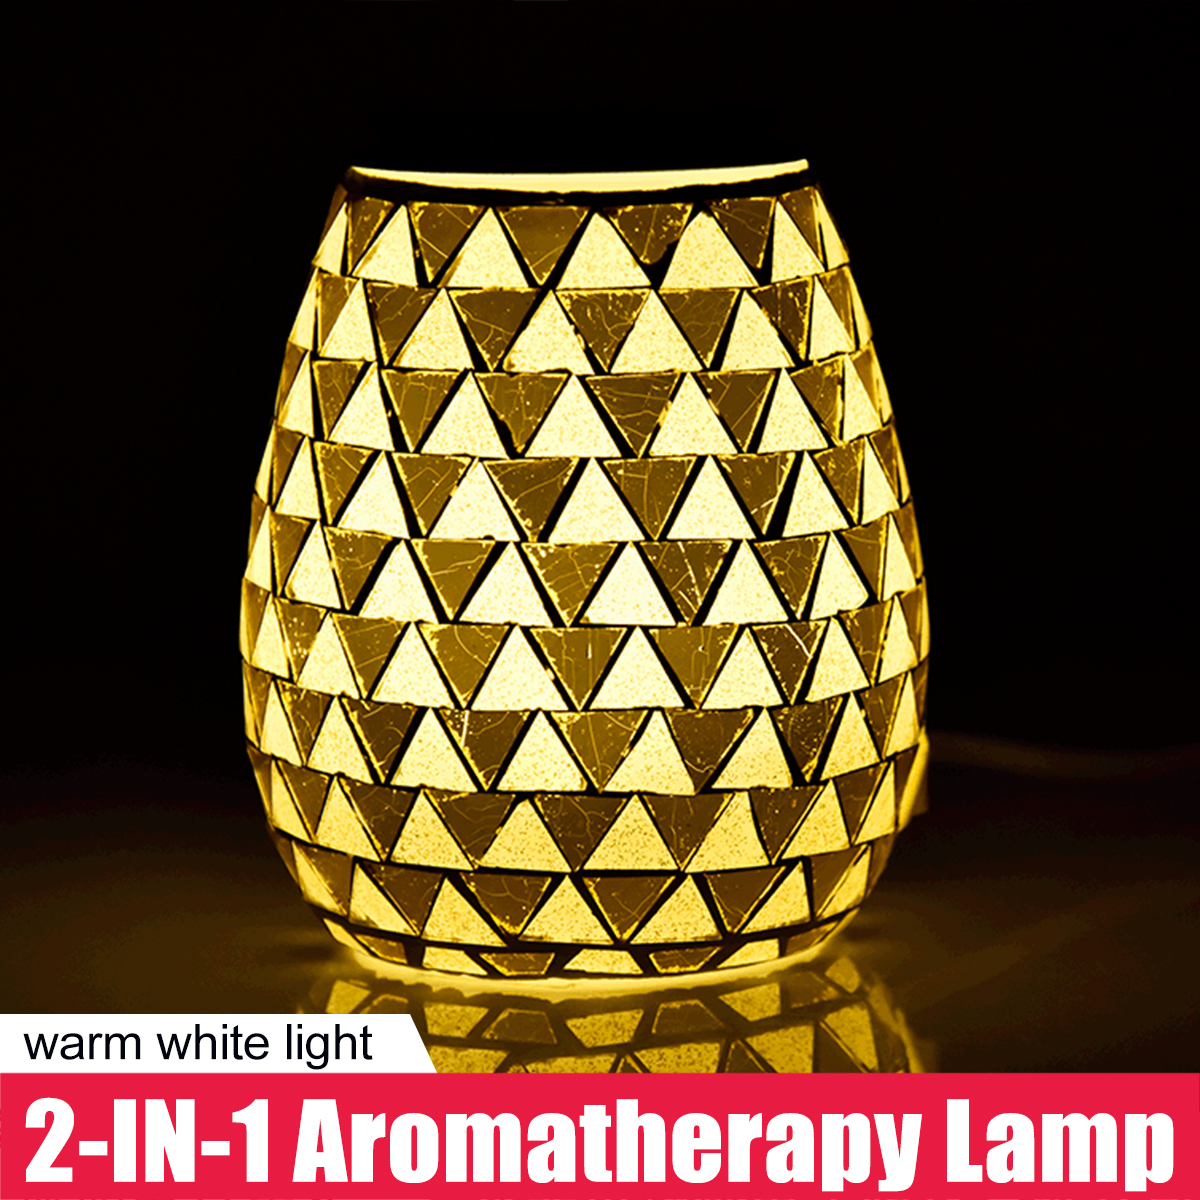 3D-Glass-Electric-Aromatherapy-Lamp-Triangle-Pattern-Warm-White-Lights-Home-Aromatherapy-Light-1837761-1